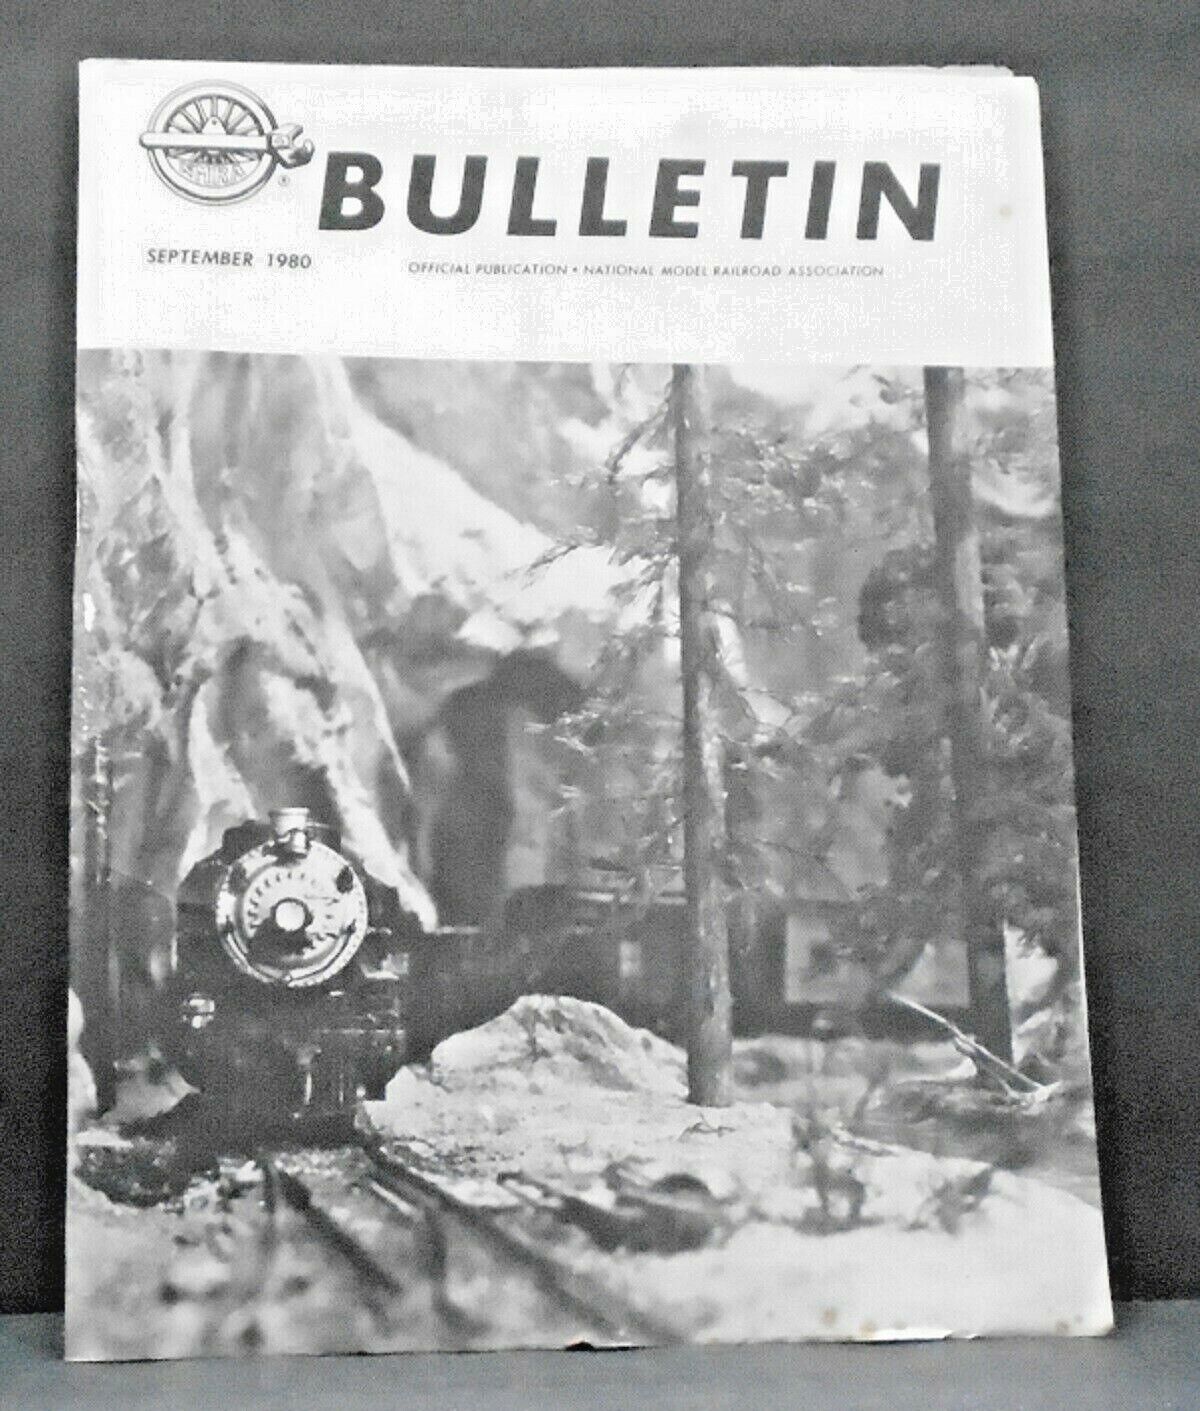 NMRA BULLETIN - NATIONAL MODEL RAILROAD ASSOC. MAGAZINE - SEPTEMBER 1980